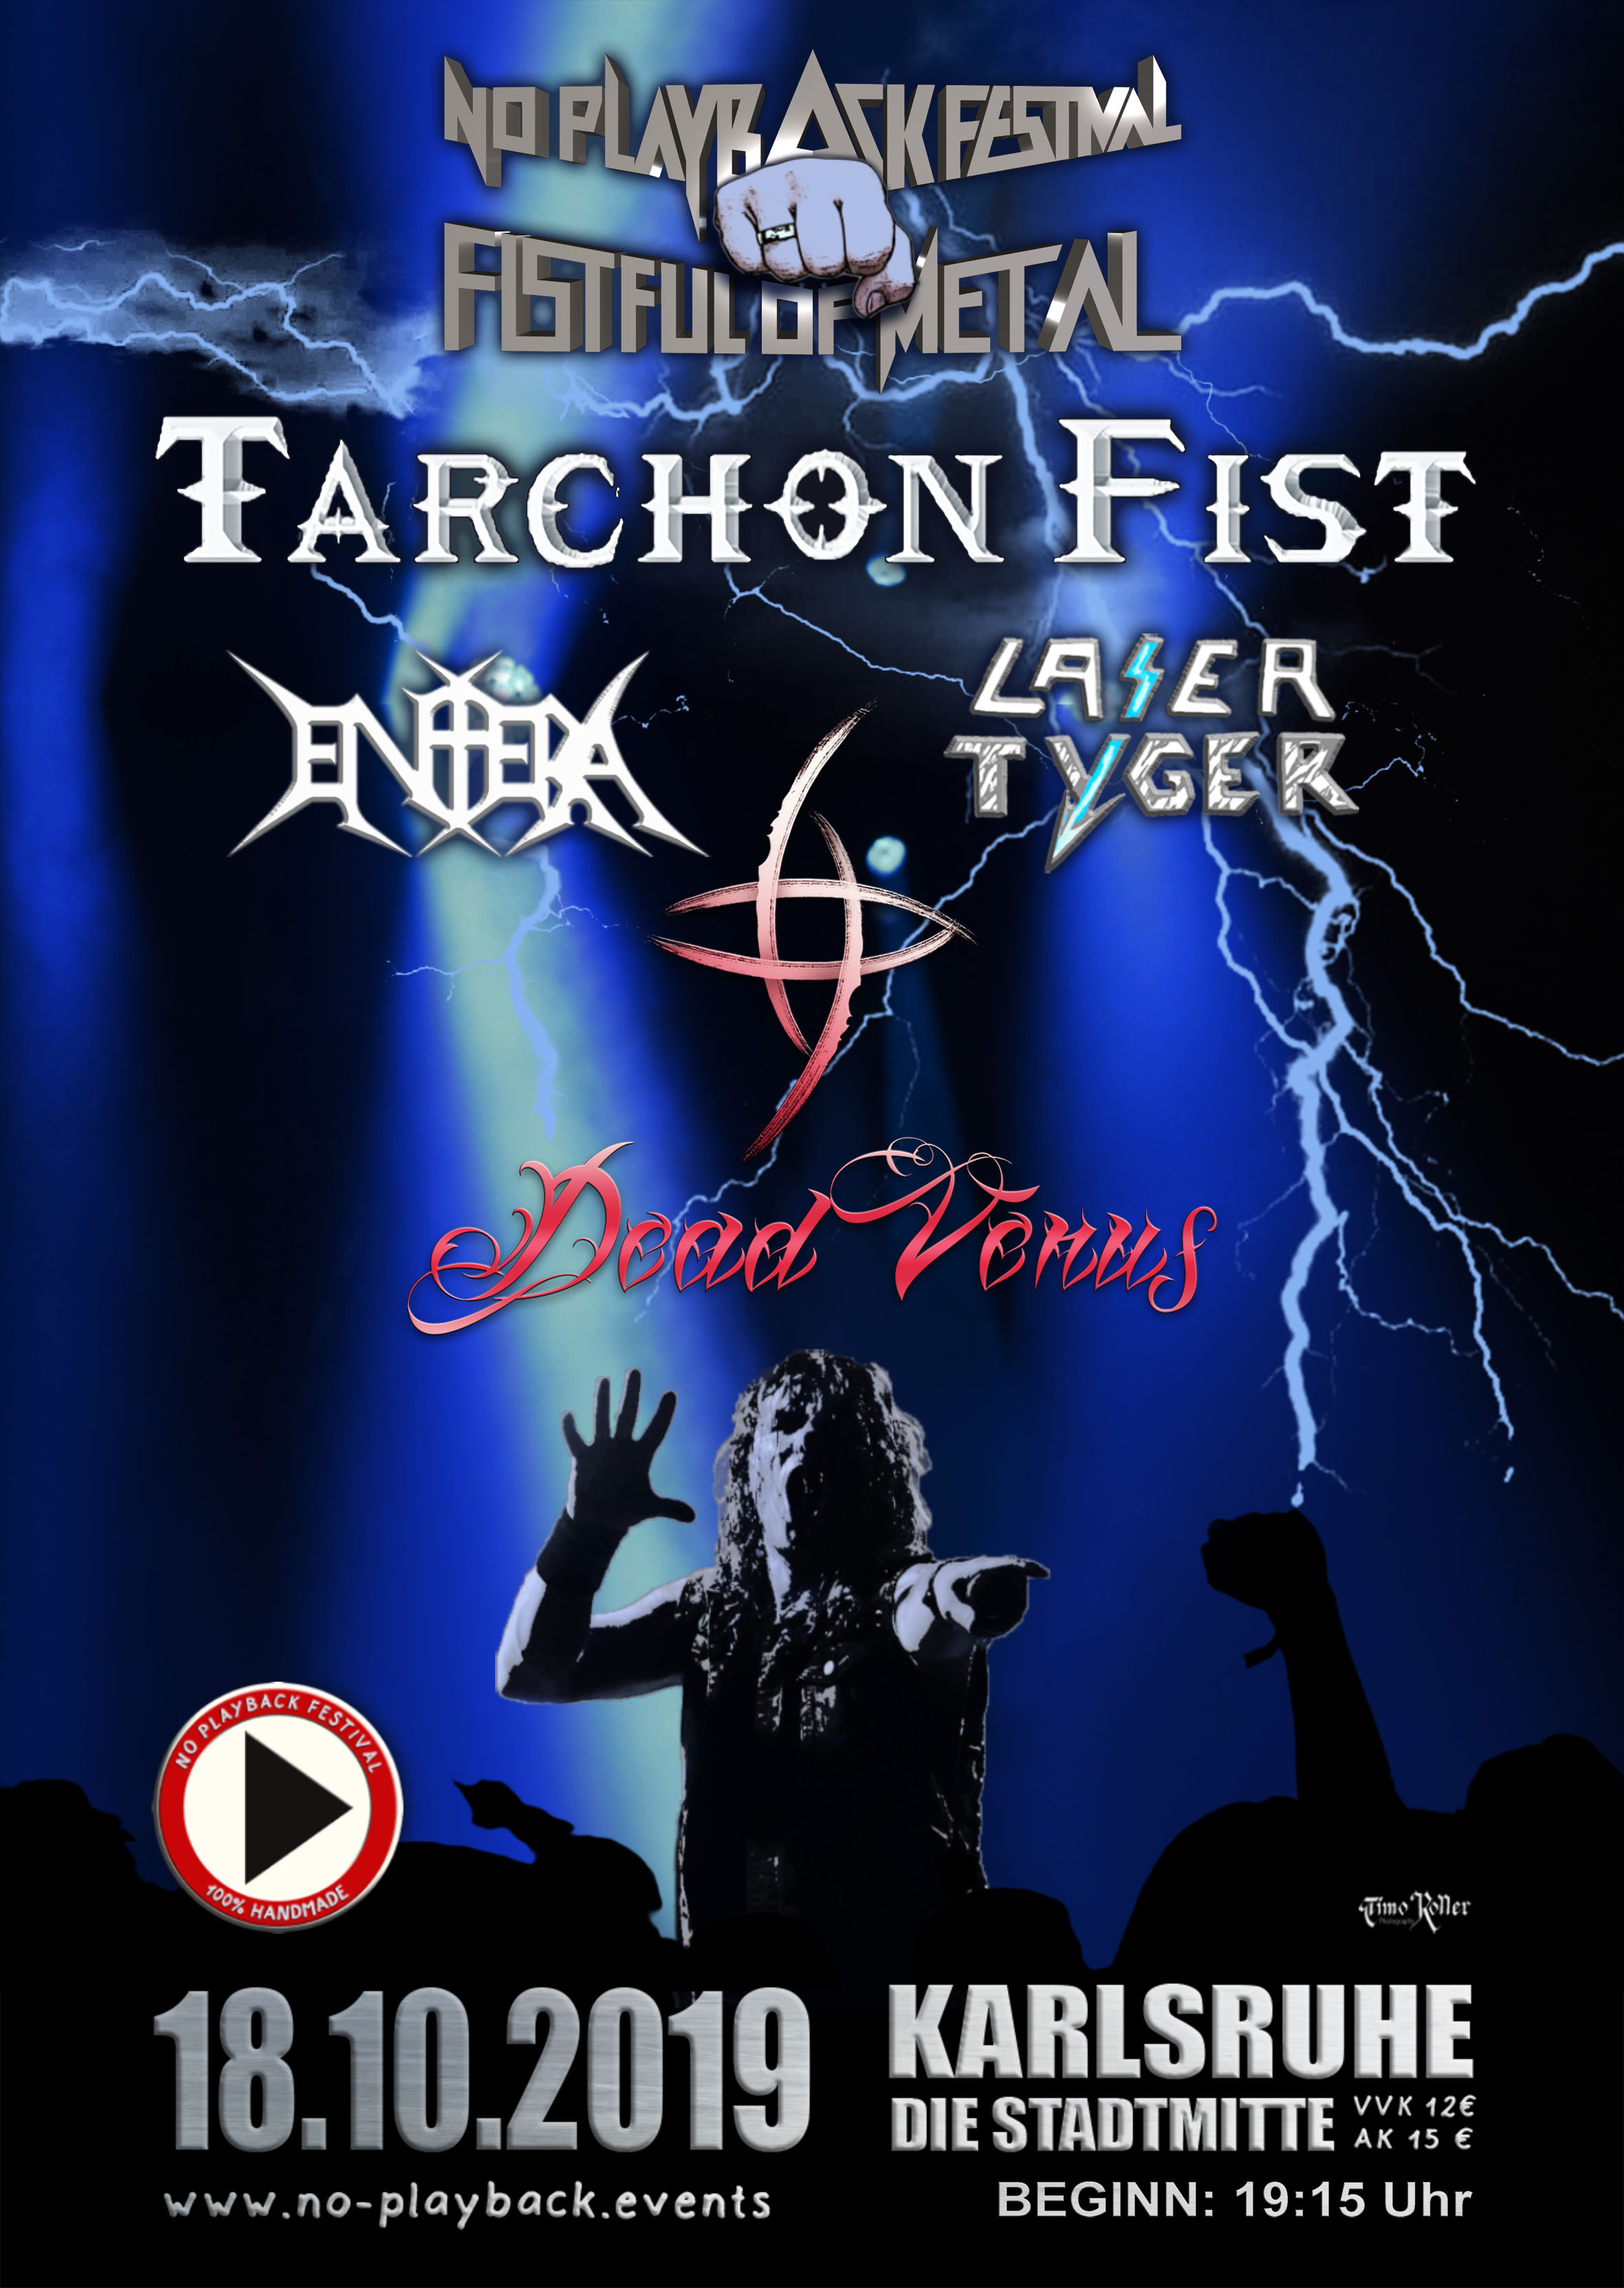 No Playback Festival presents Tarchon Fist